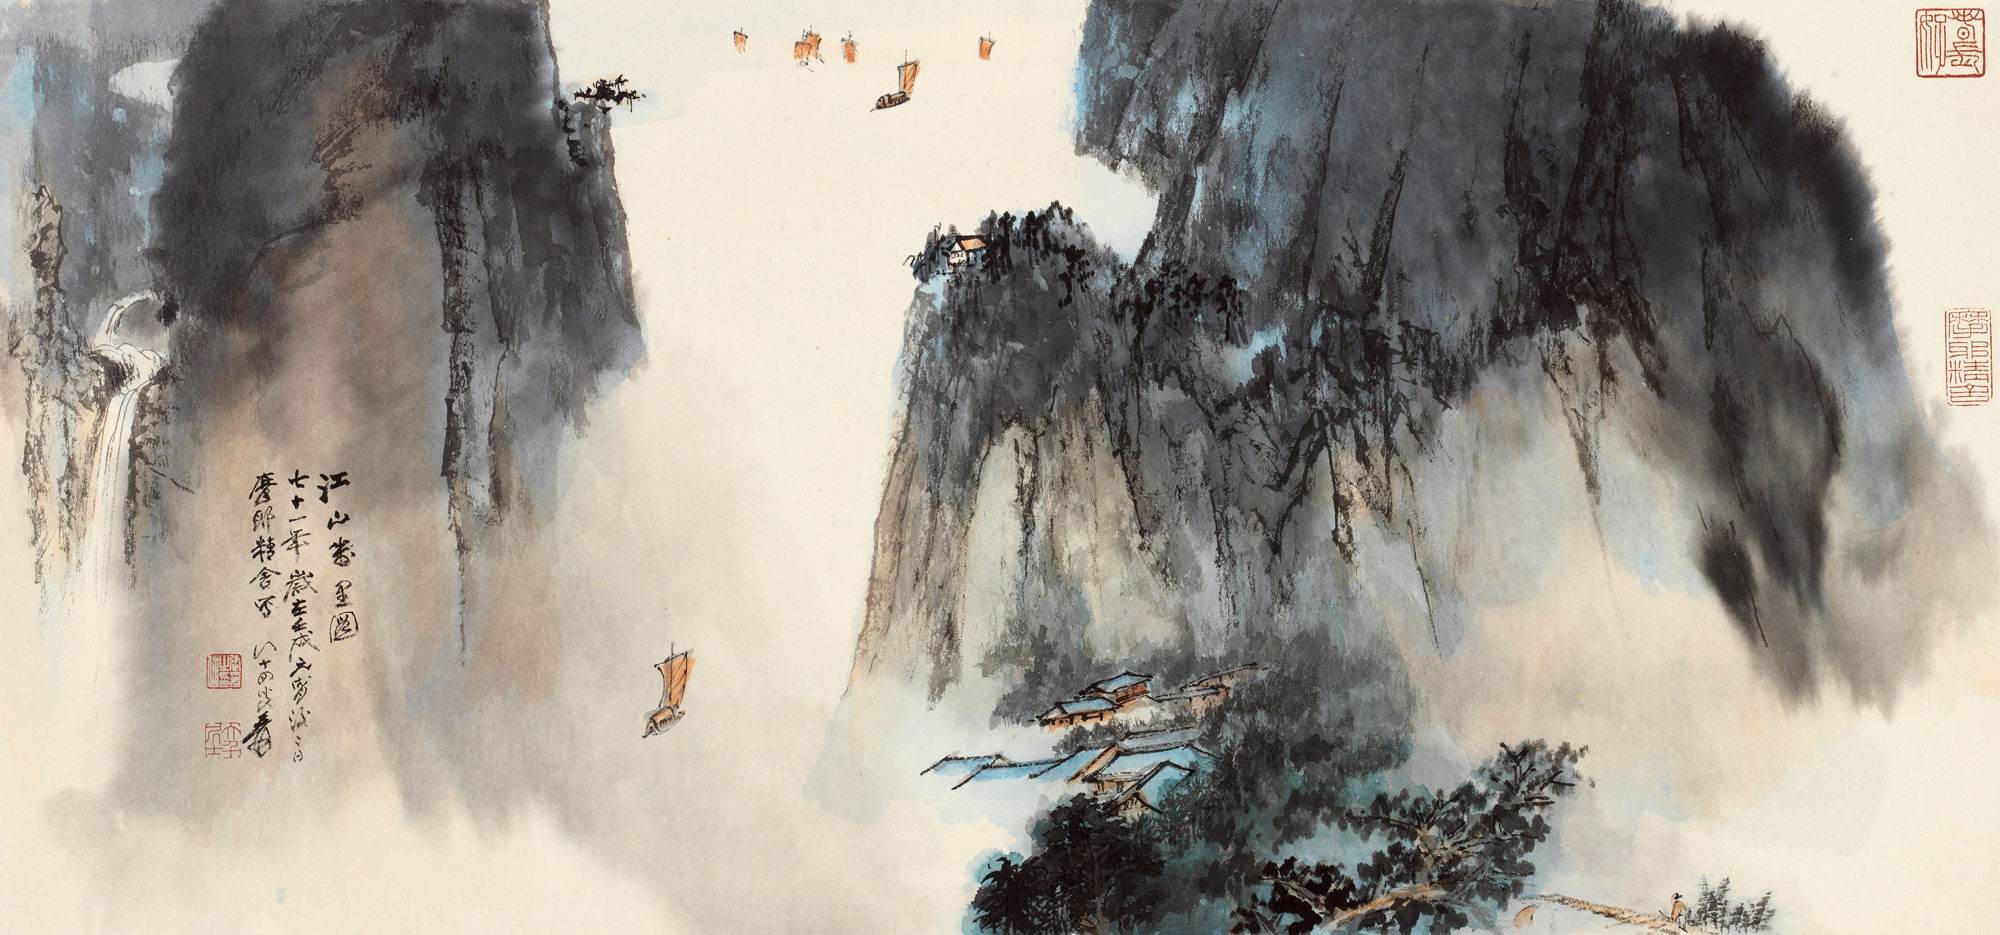 famous chinese painting artist zhang daqian